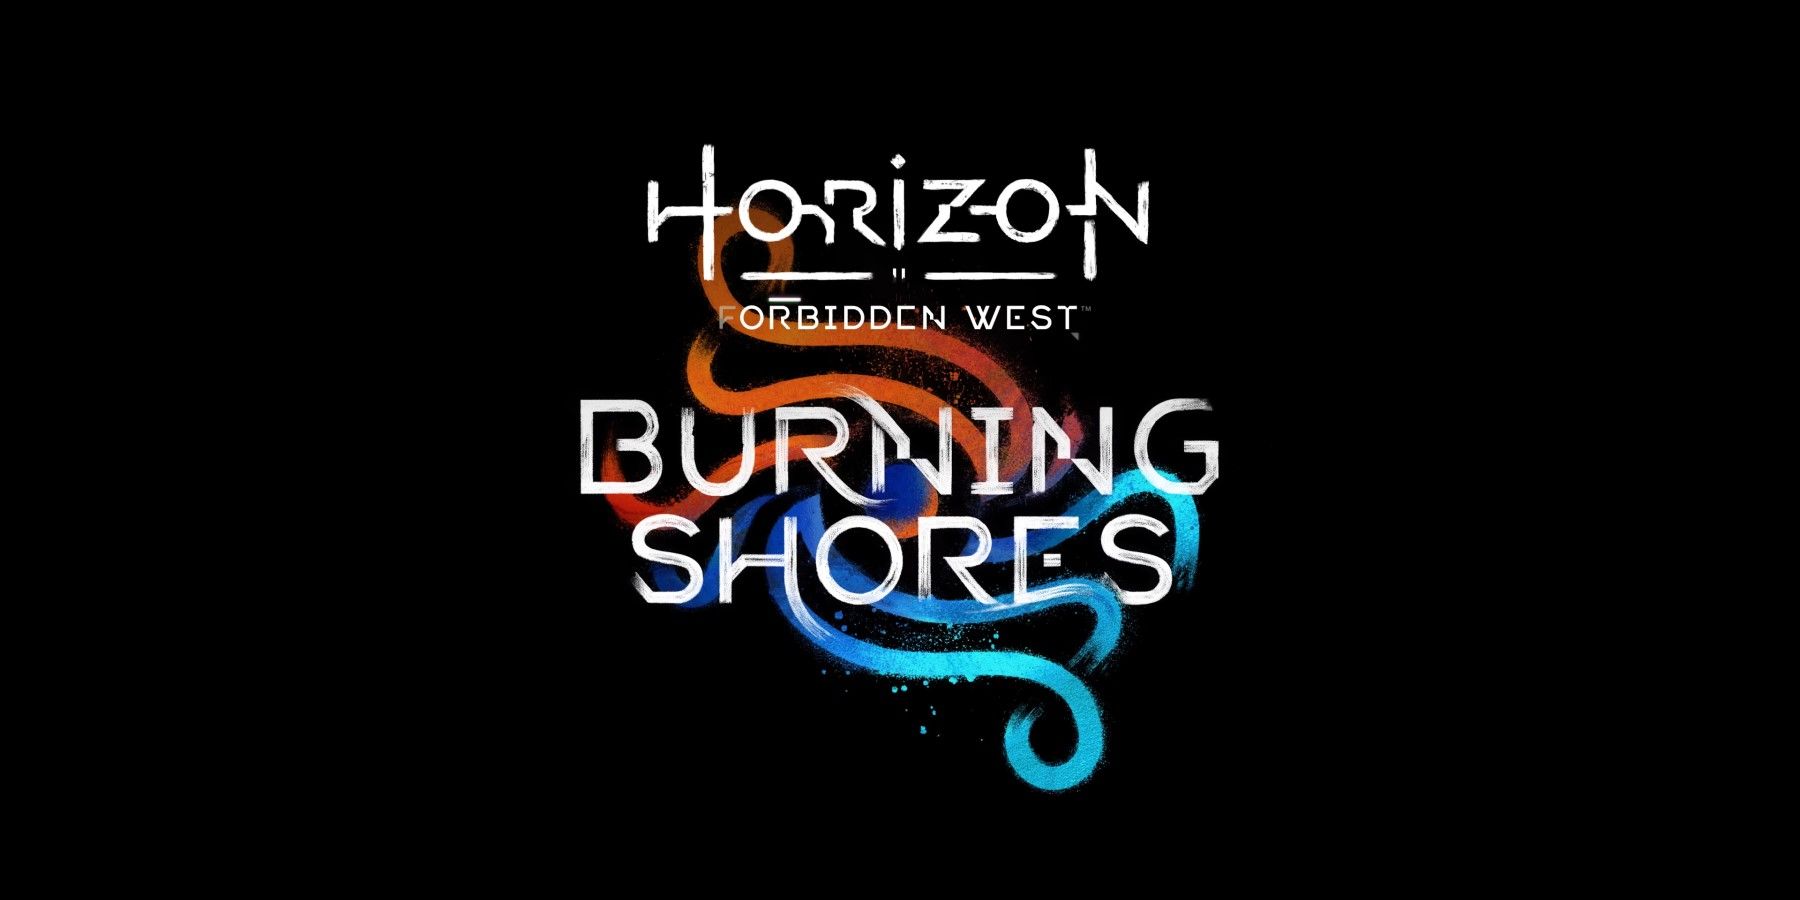 horizon forbidden west: burning shores price